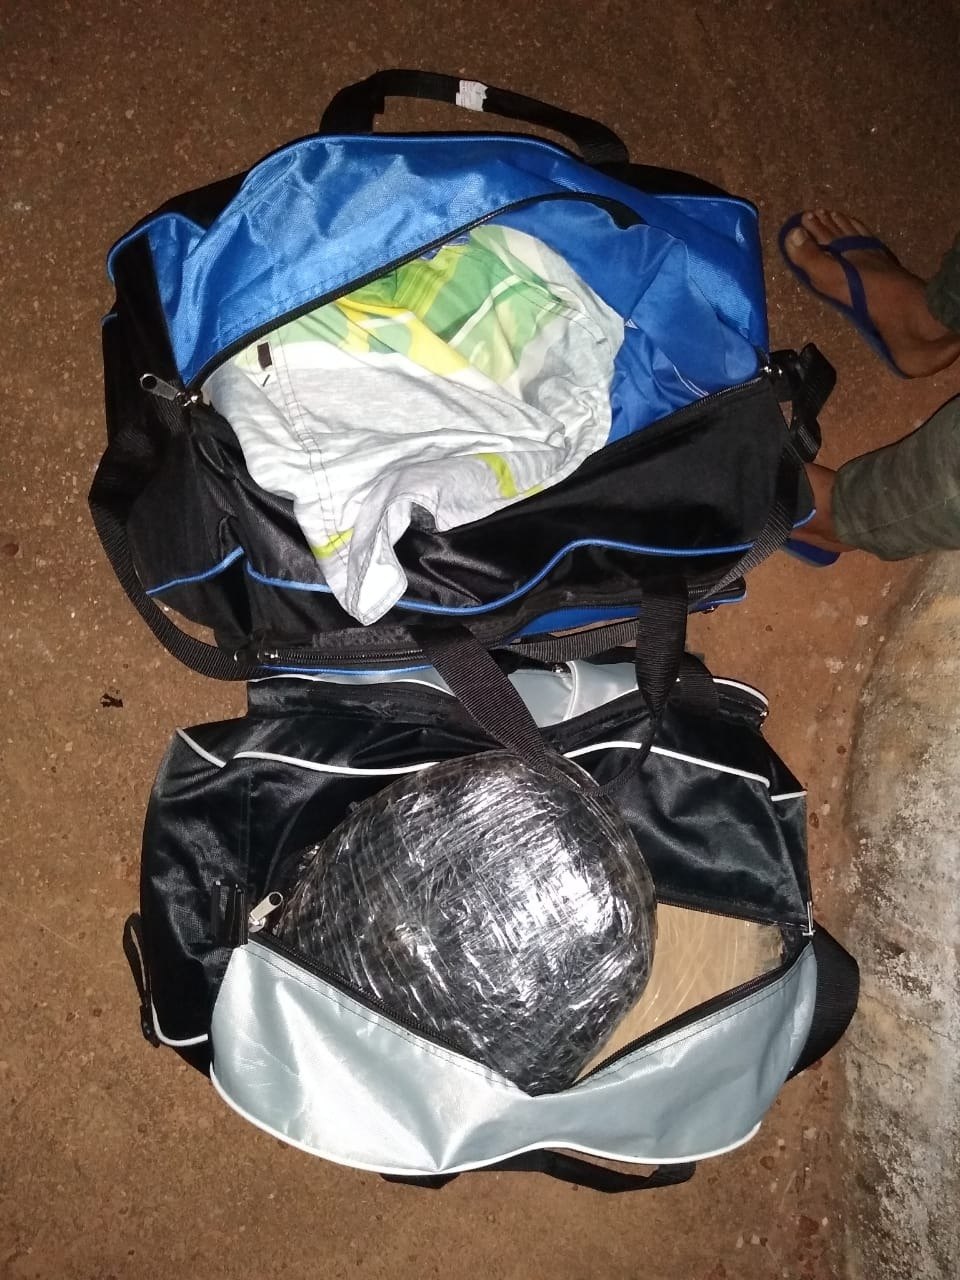 FLAGRANTE: Polícia Civil prende traficantes com 20 quilos de droga após interceptar ônibus 